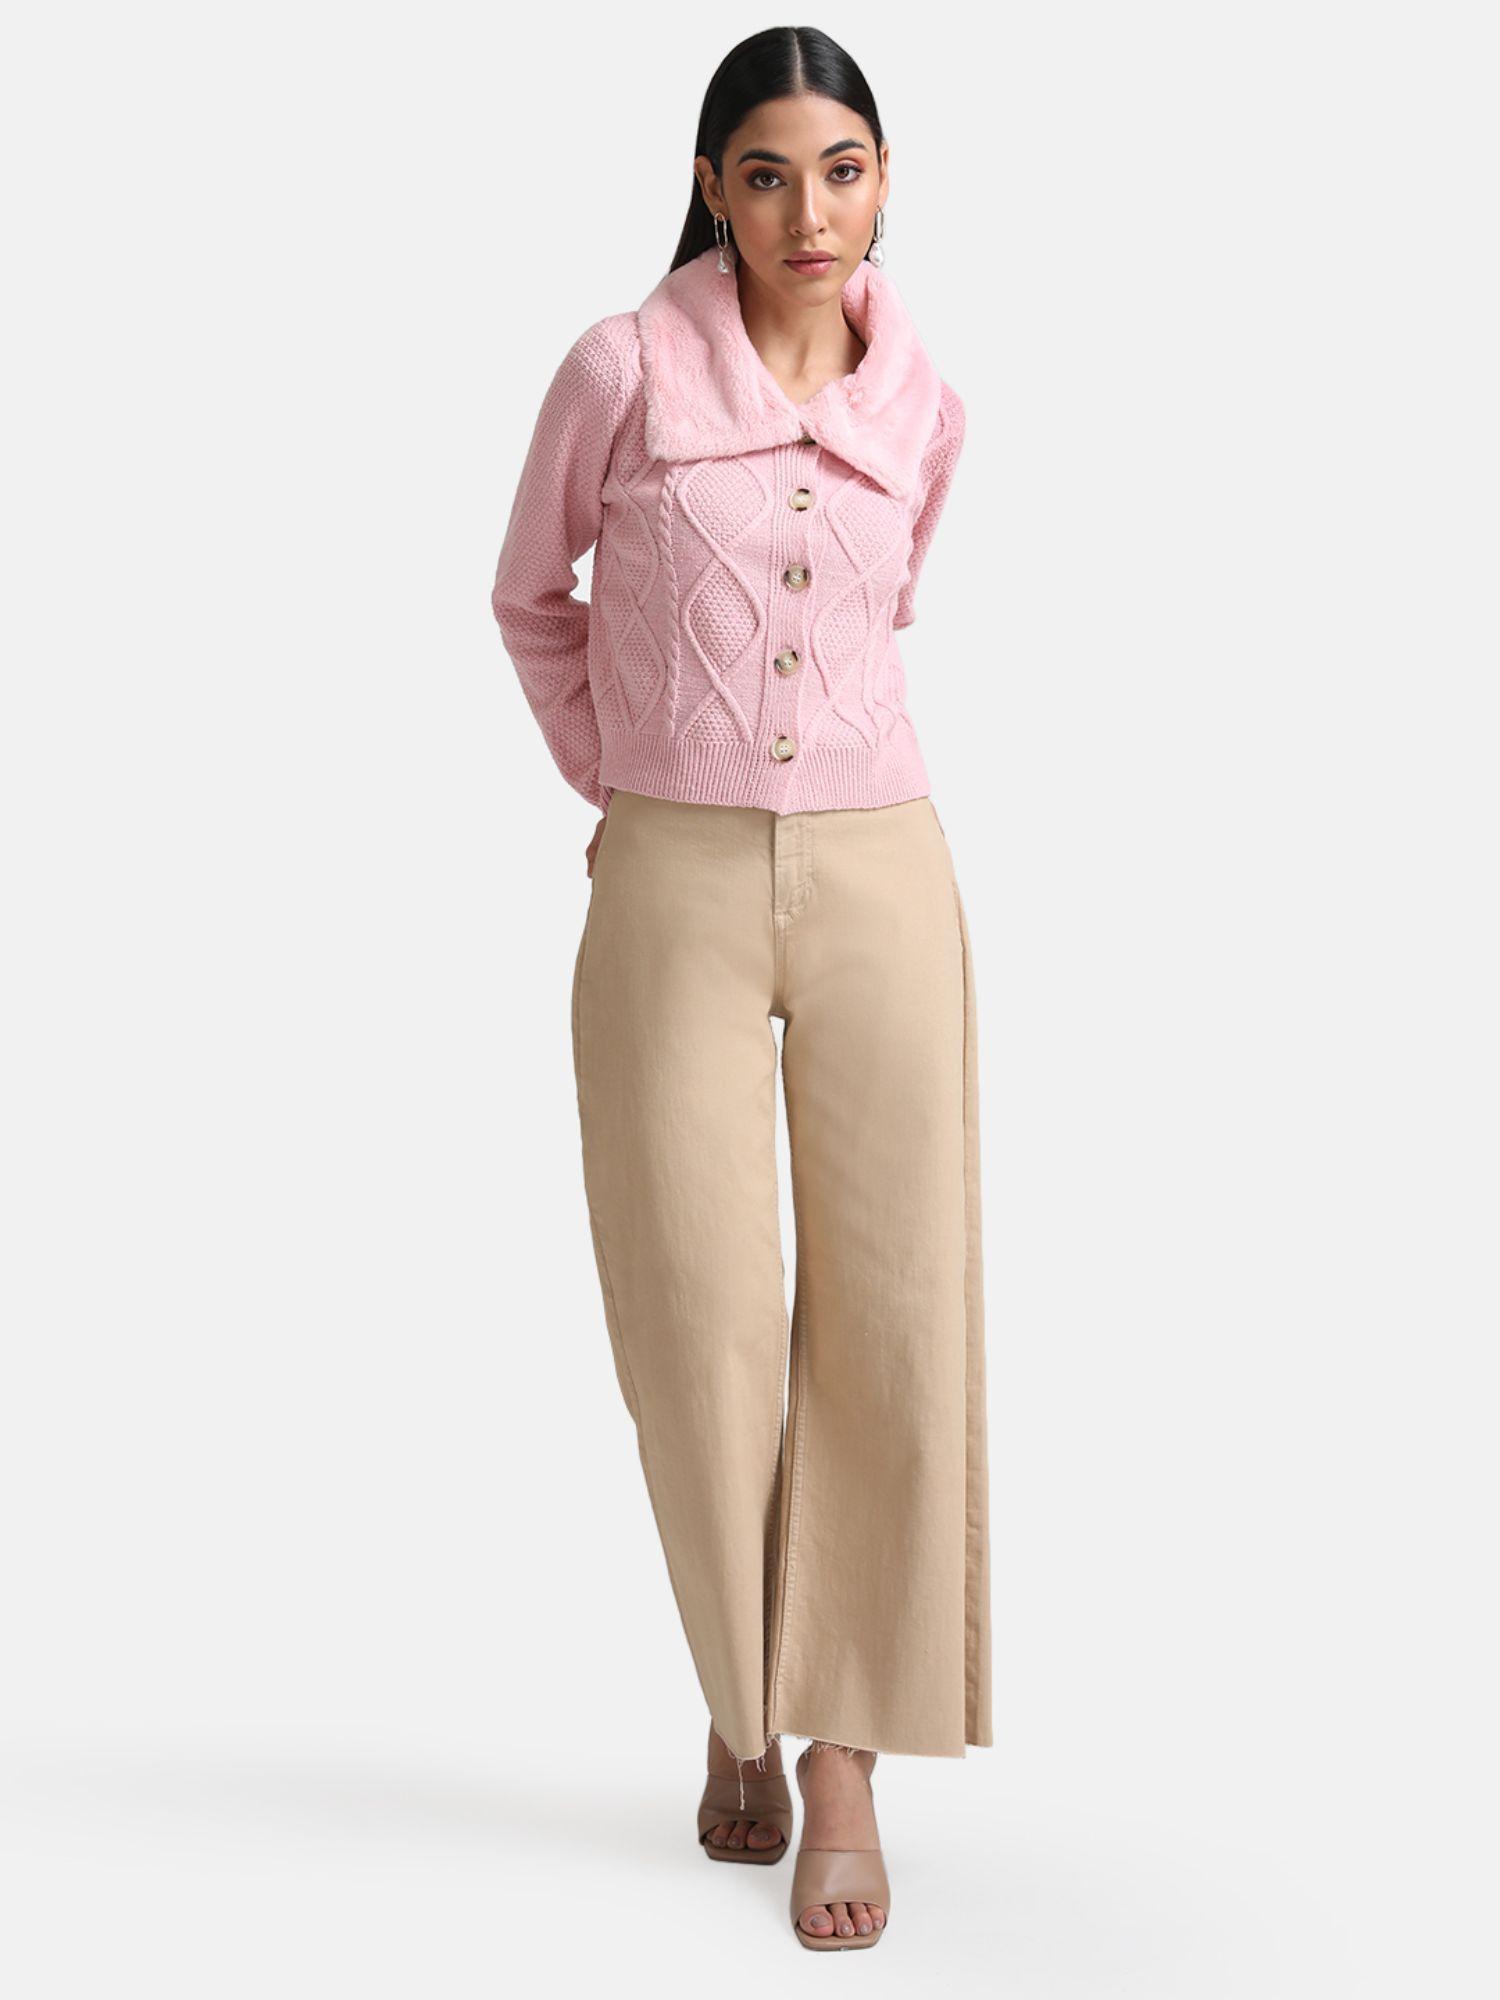 pink-cardigan-with-fur-collar